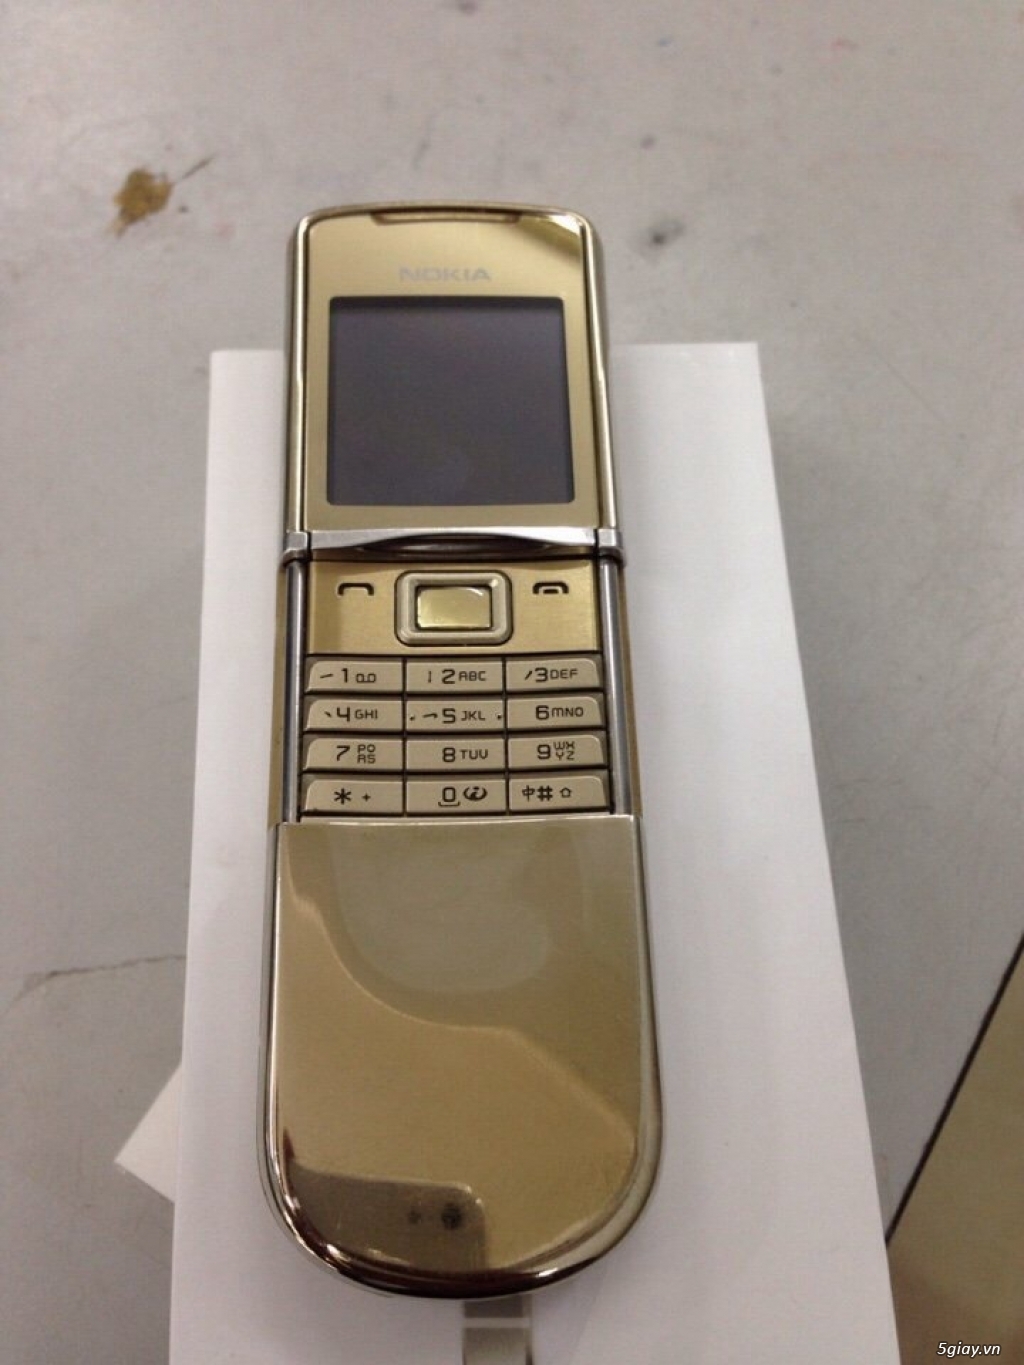 Nokia 8800 Siroco Gold  Ime 789 ^^zin leng keng - 1